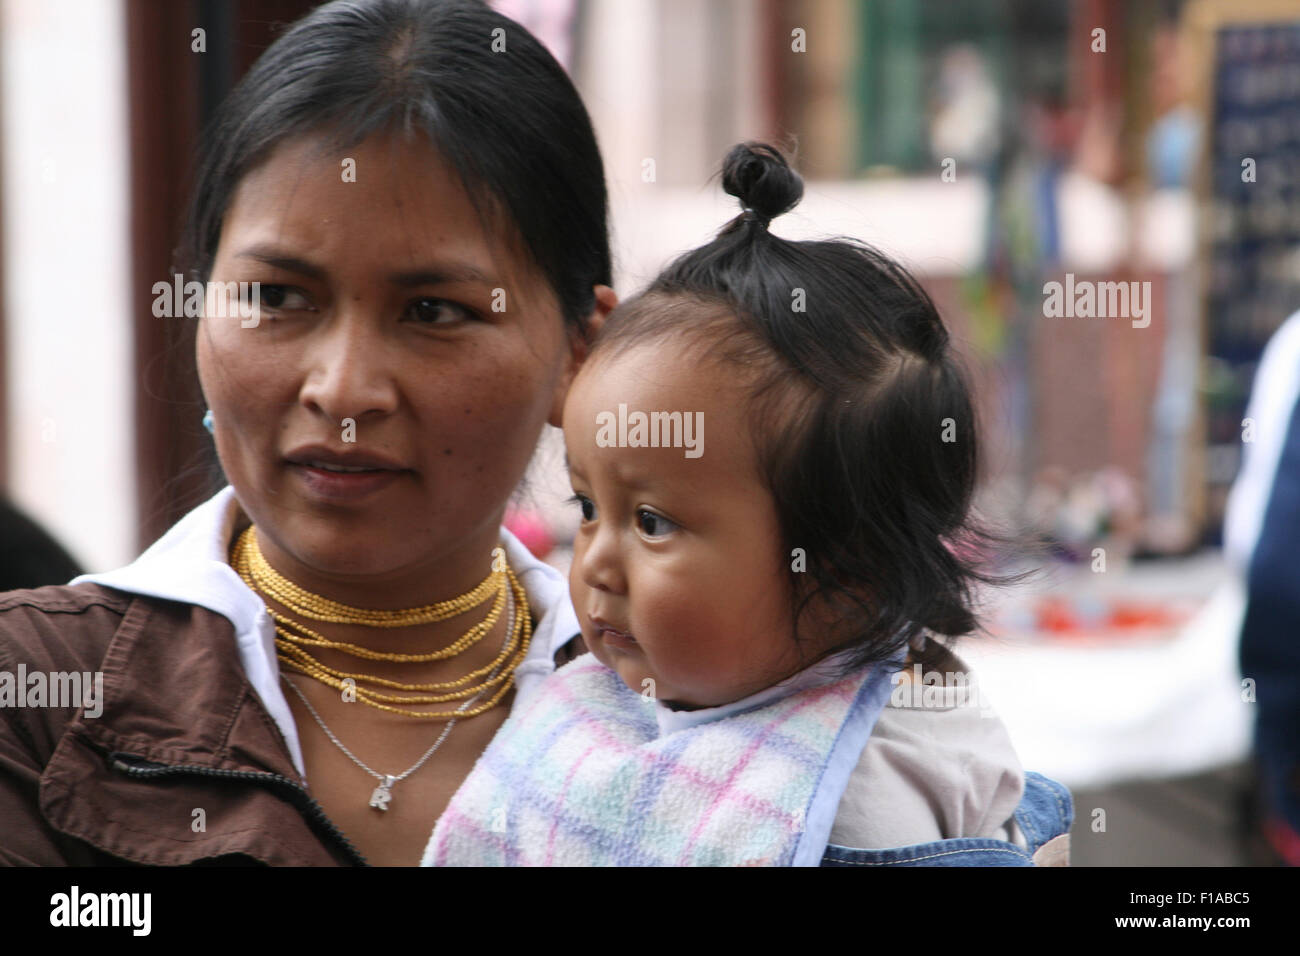 Indigenous woman and child, Otavalo Market, Ecuador Stock Photo